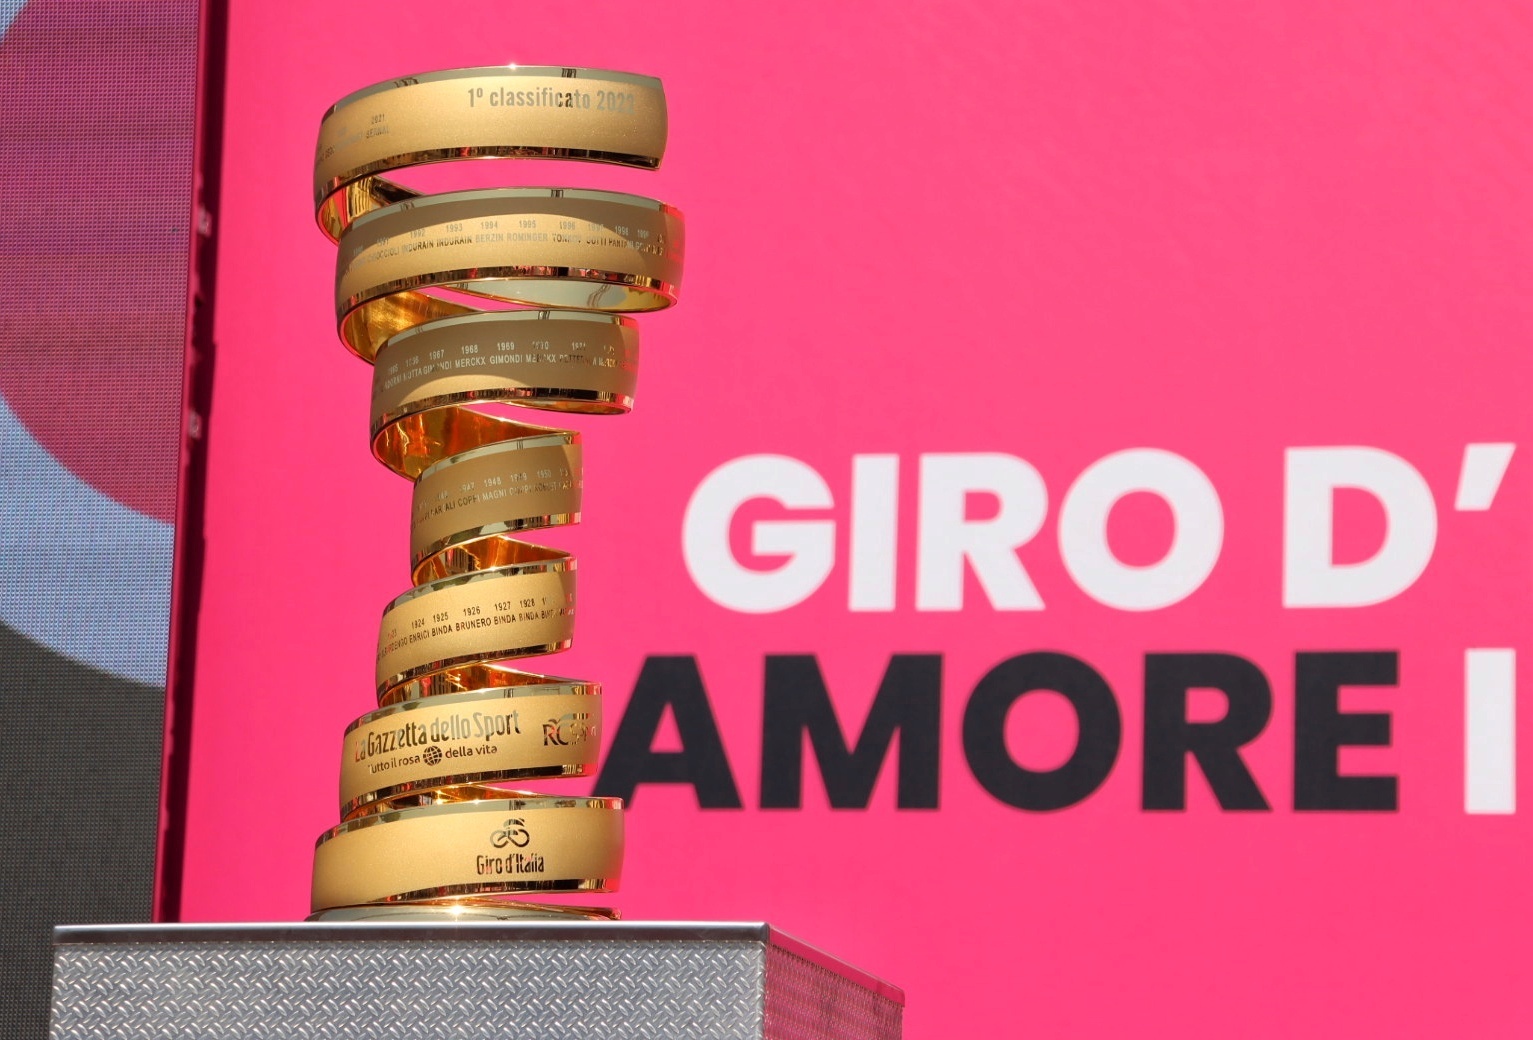 Trofeo Giro d'Italia